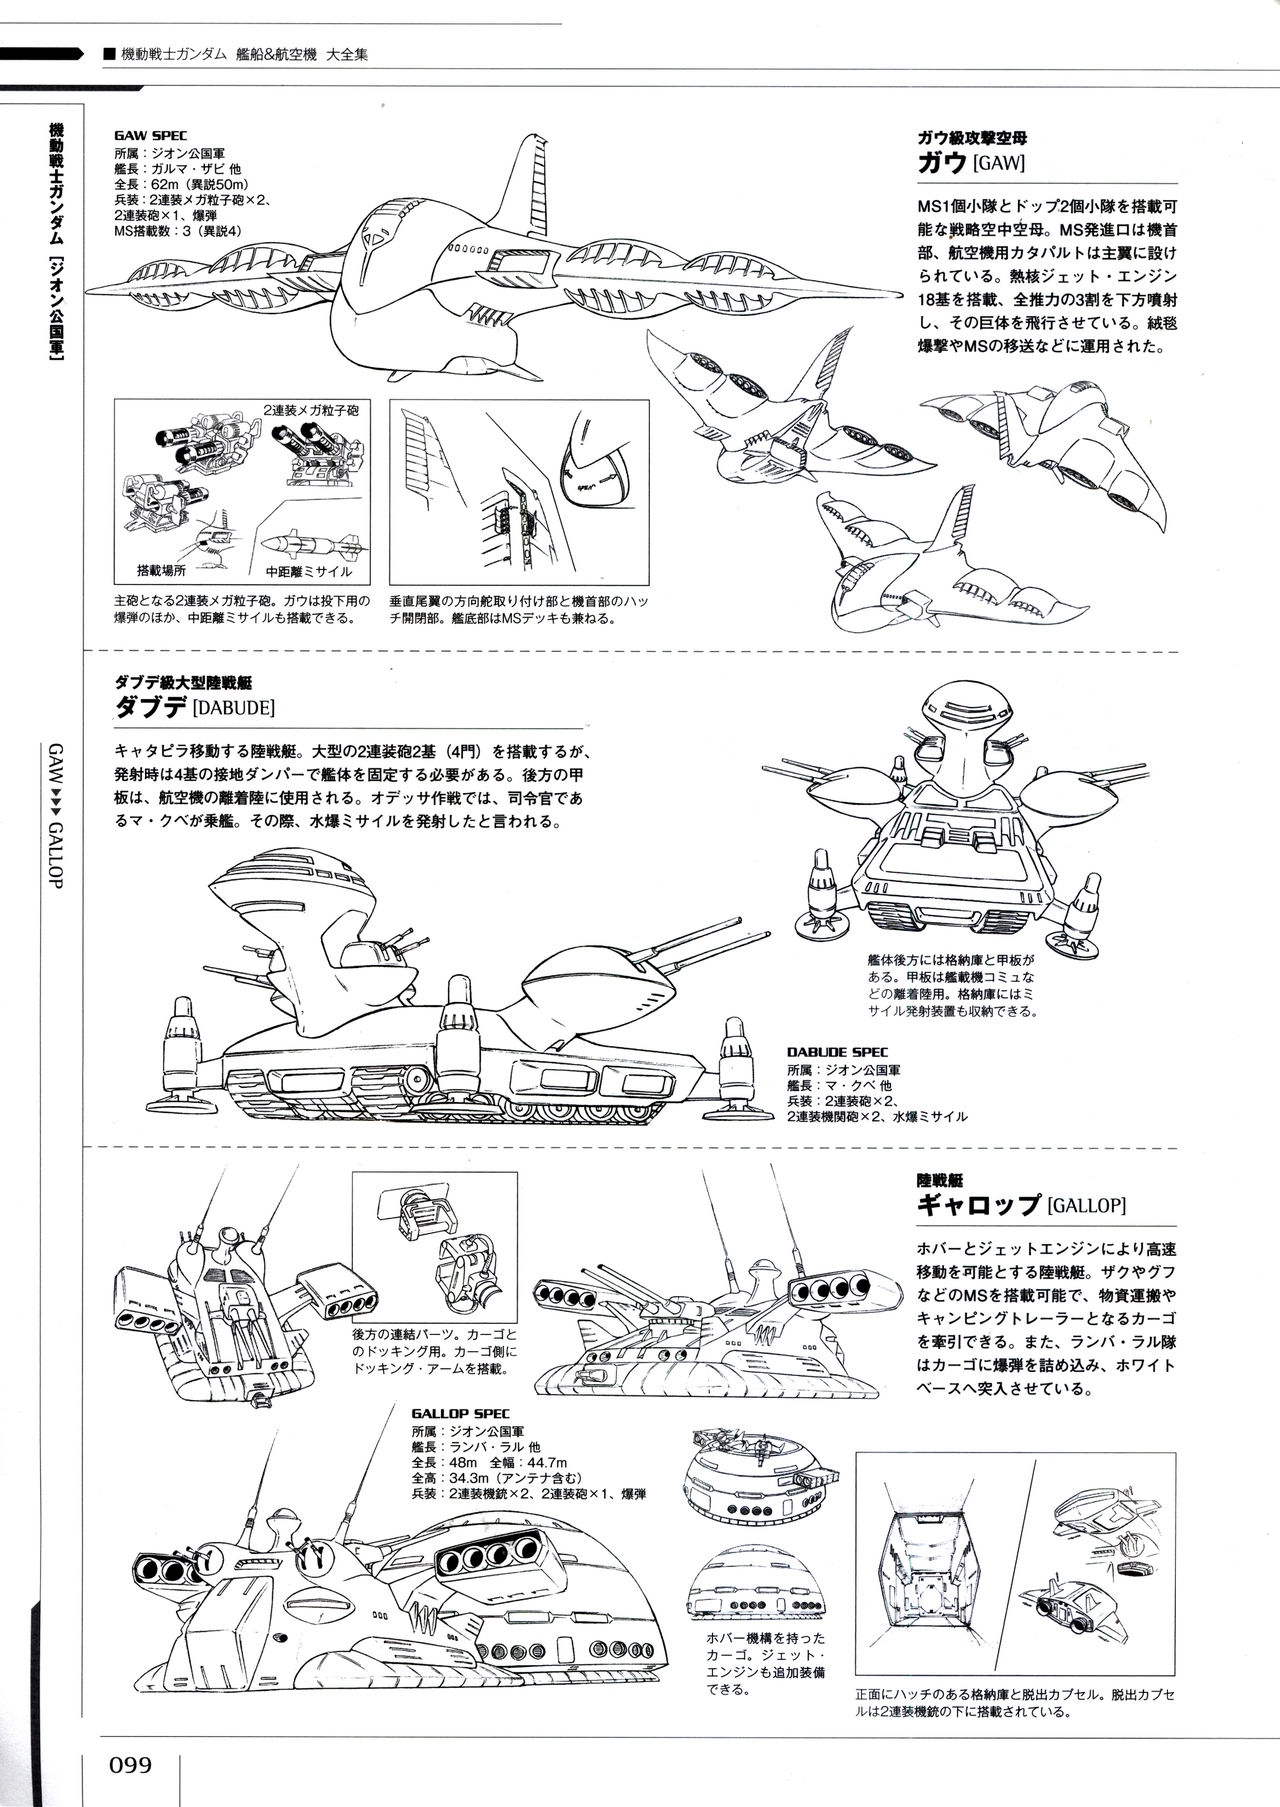 Mobile Suit Gundam - Ship & Aerospace Plane Encyclopedia - Revised Edition 104